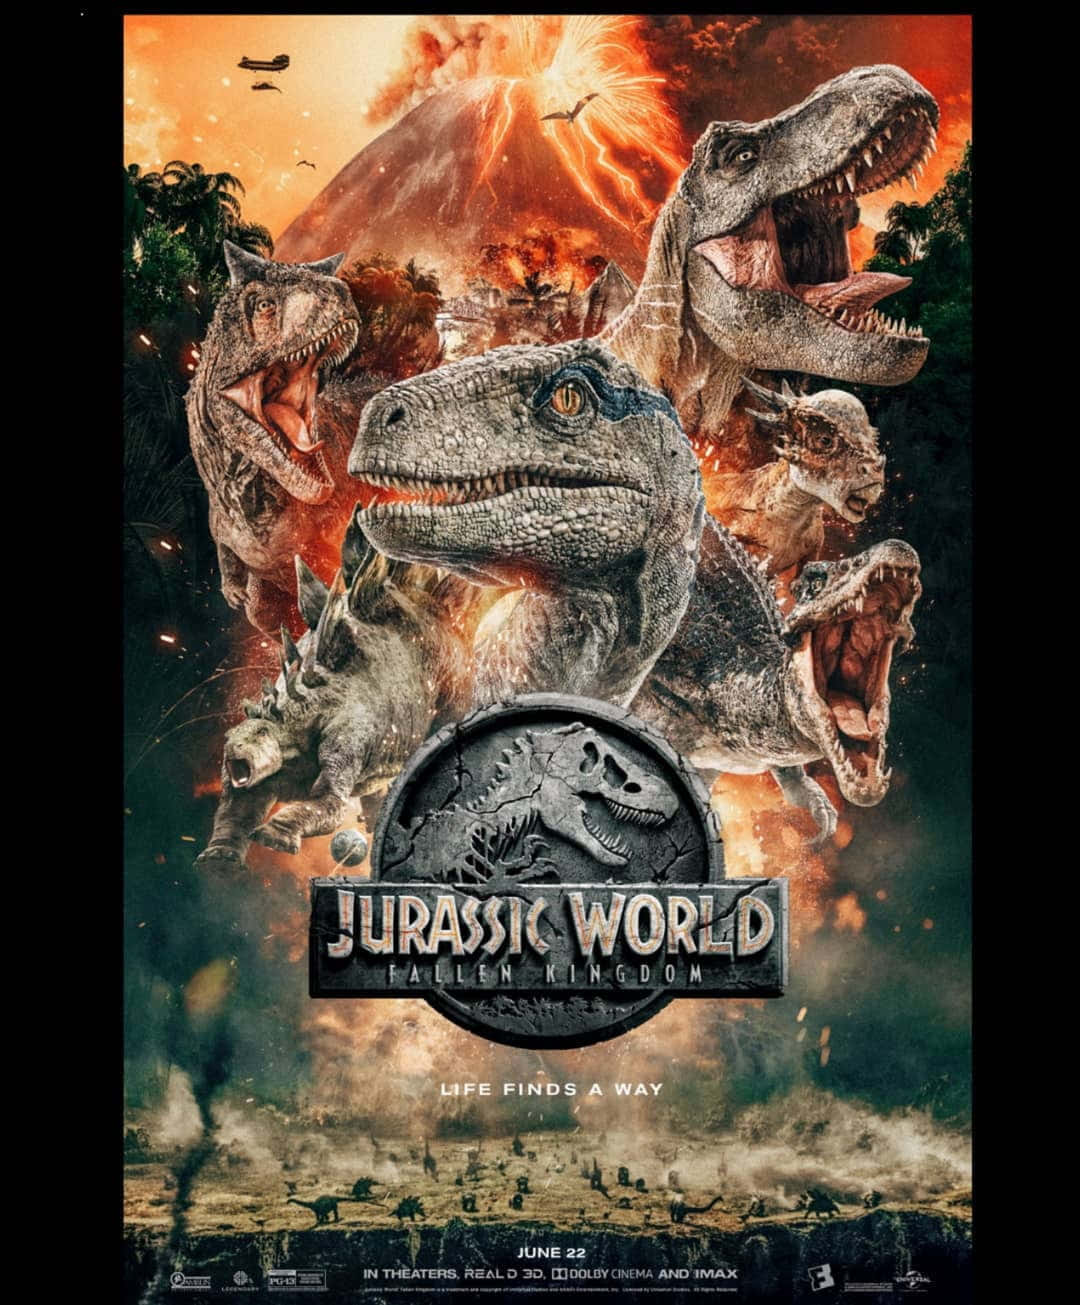 Imagende Dinosaurios Jurassic World Fallen Kingdom